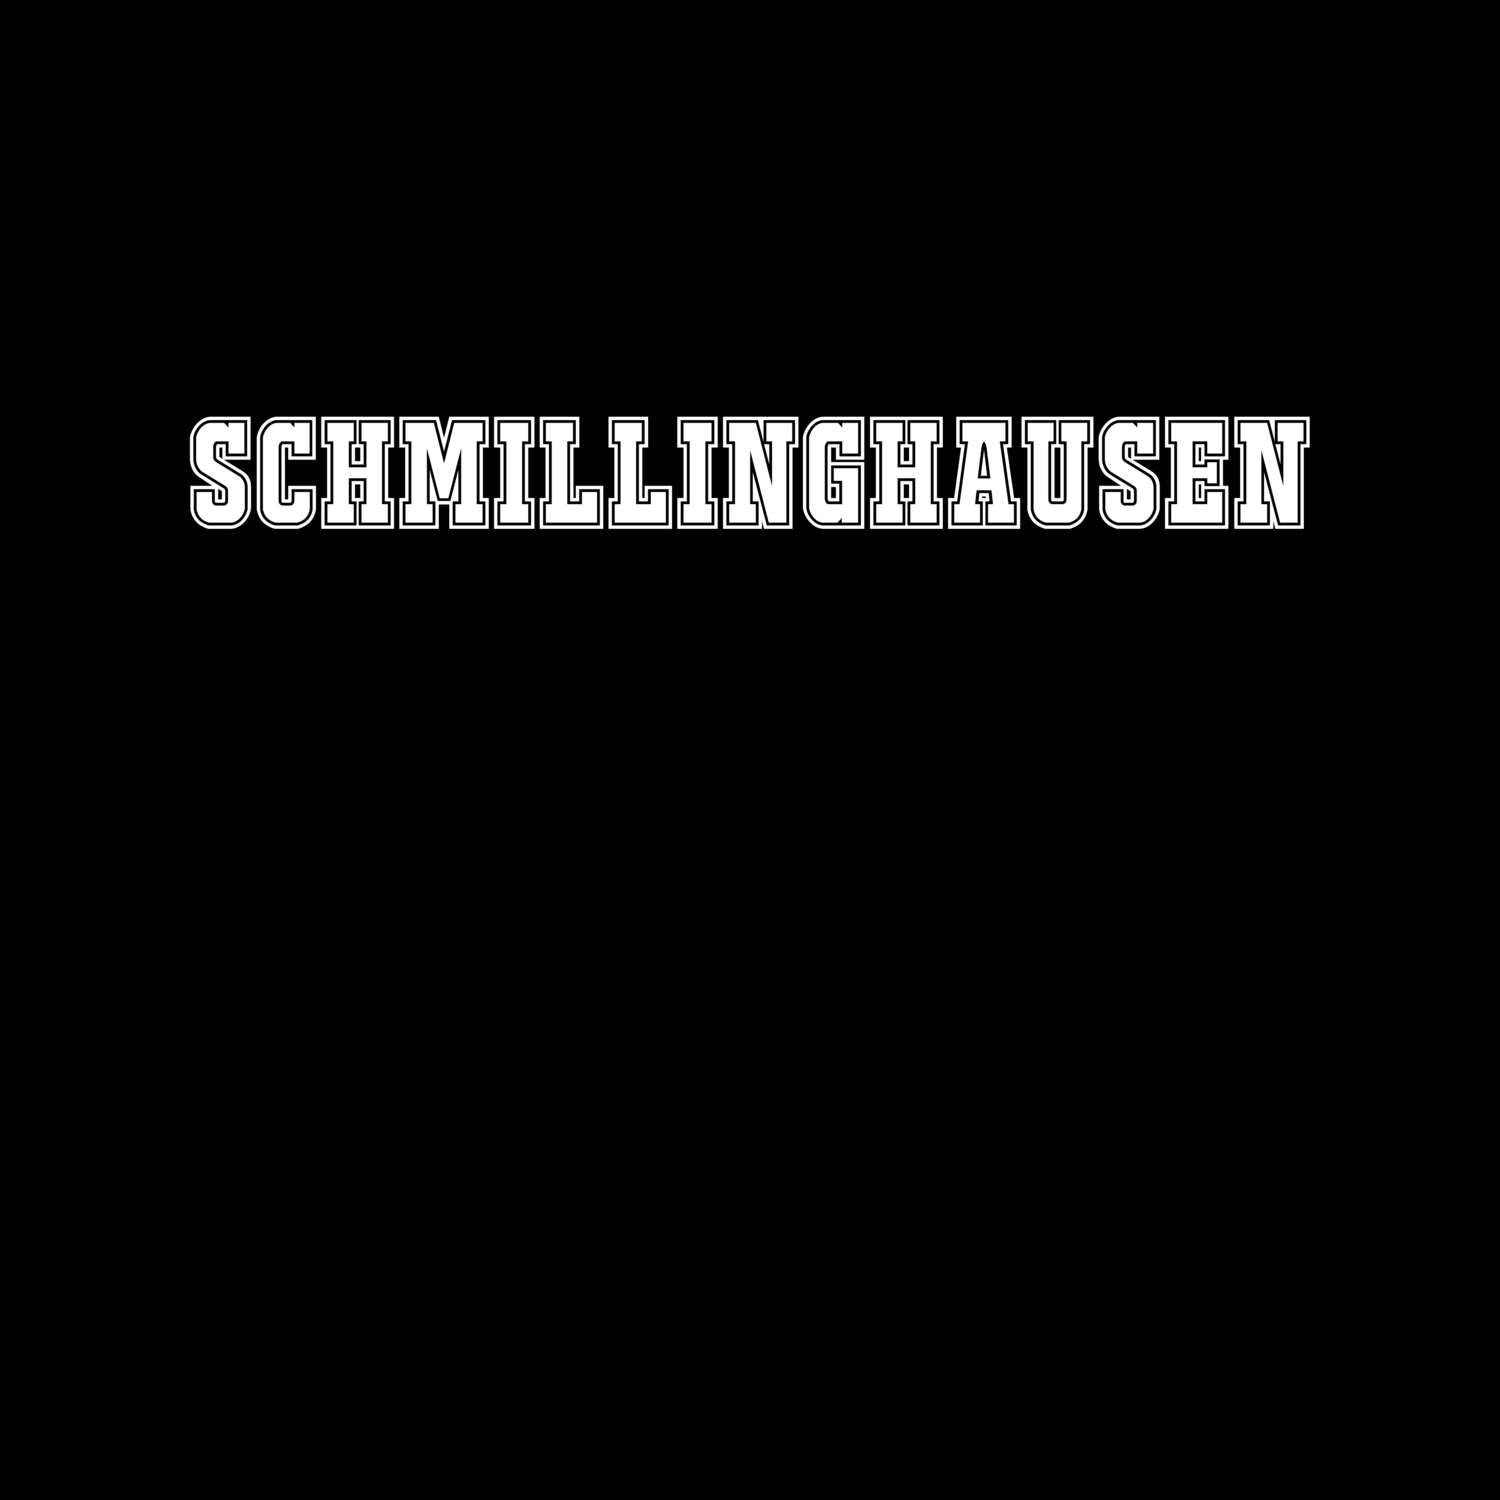 Schmillinghausen T-Shirt »Classic«